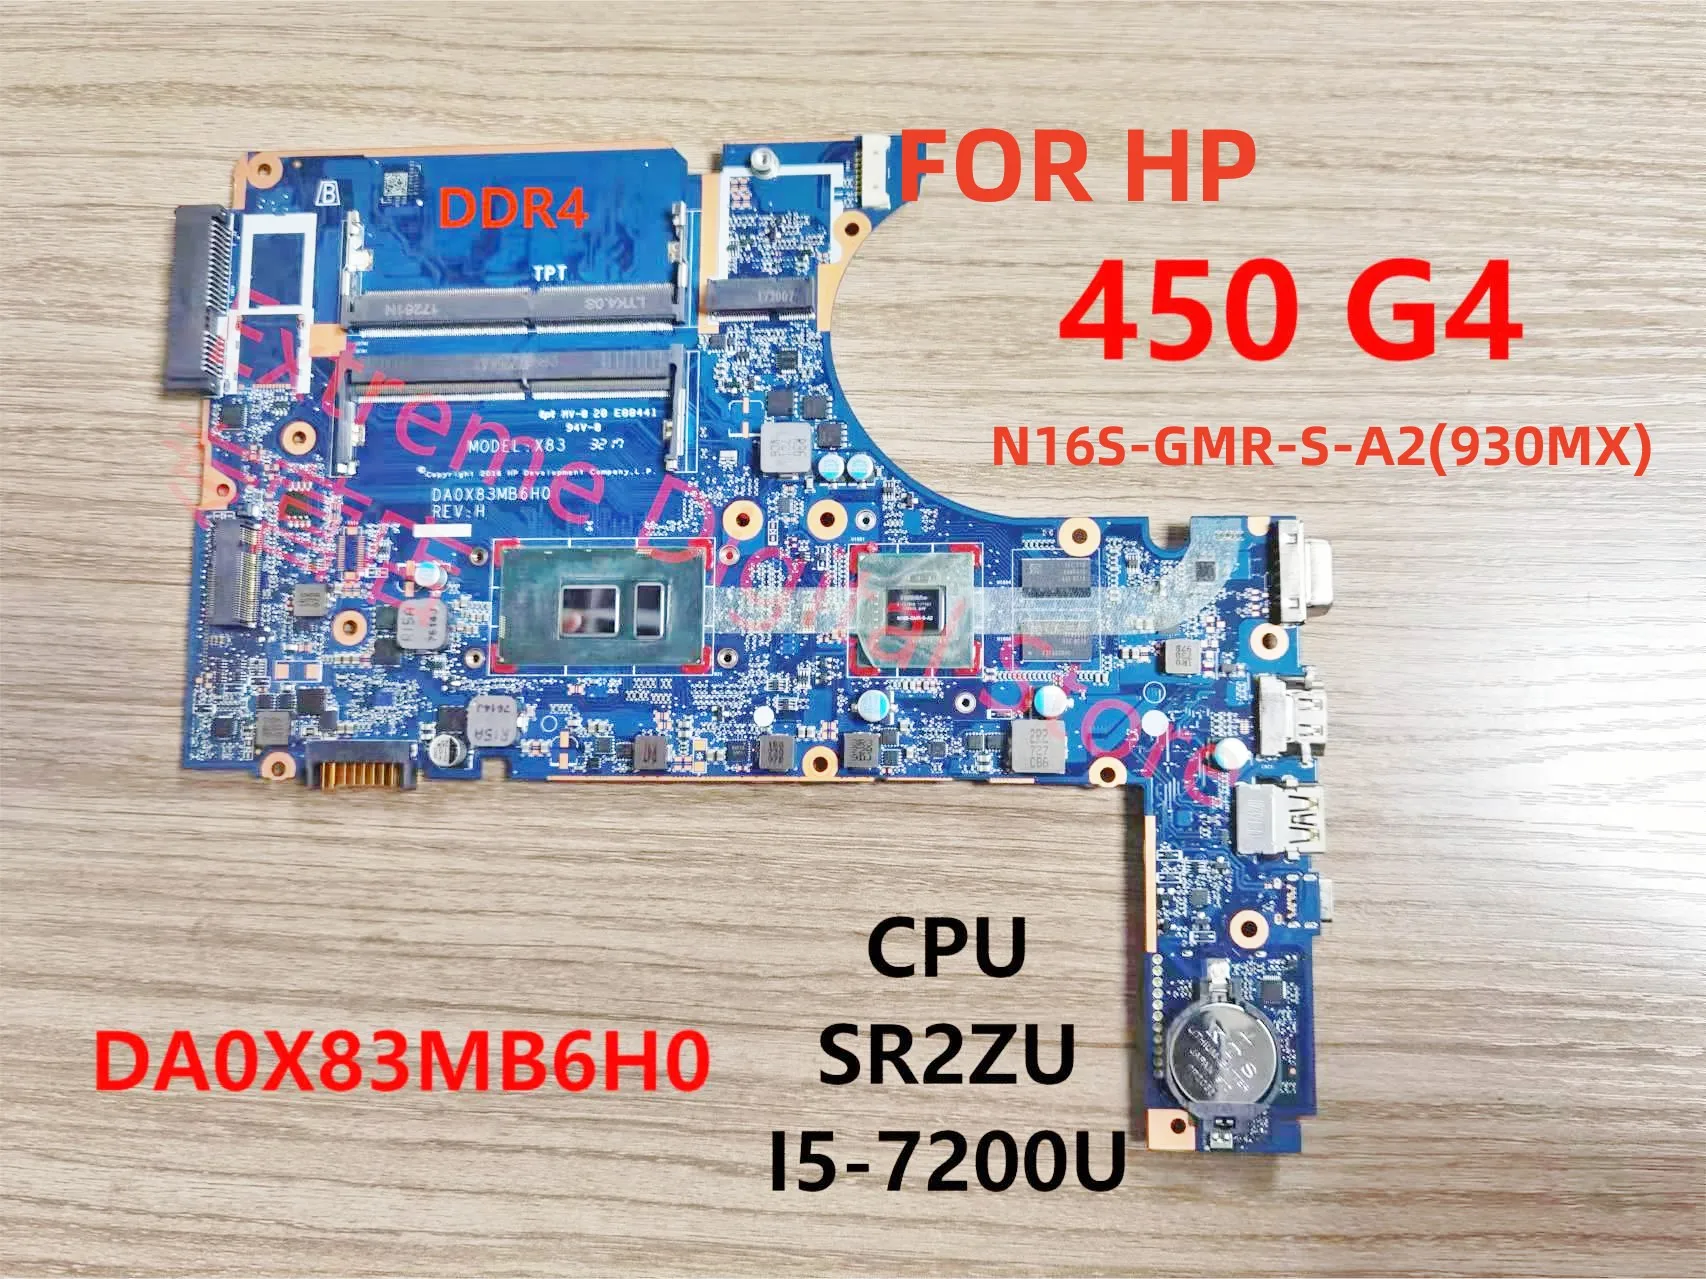 DA0X83MB6H0 Alkalmas HP 450 G4 Laptop Alaplap I5-7200U CPU-GPU: N16S-GMR-S-A2 930MX Szállítmány0